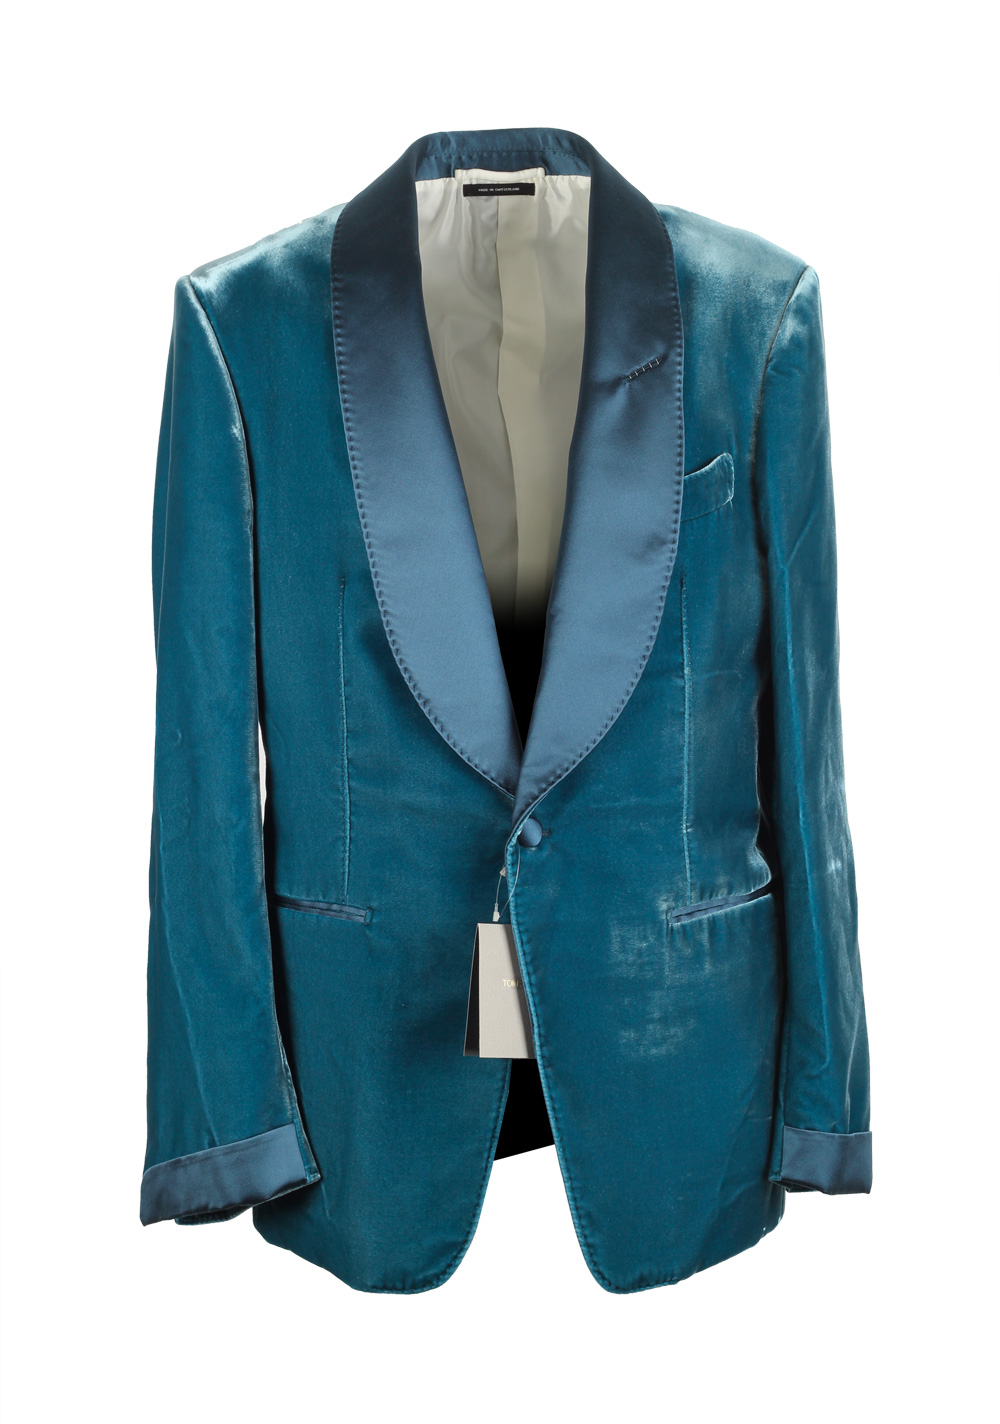 TOM FORD Shelton Shawl Collar Velvet Teal Sport Coat Tuxedo Dinner Jacket Size Size 50 / 40R U.S. | Costume Limité